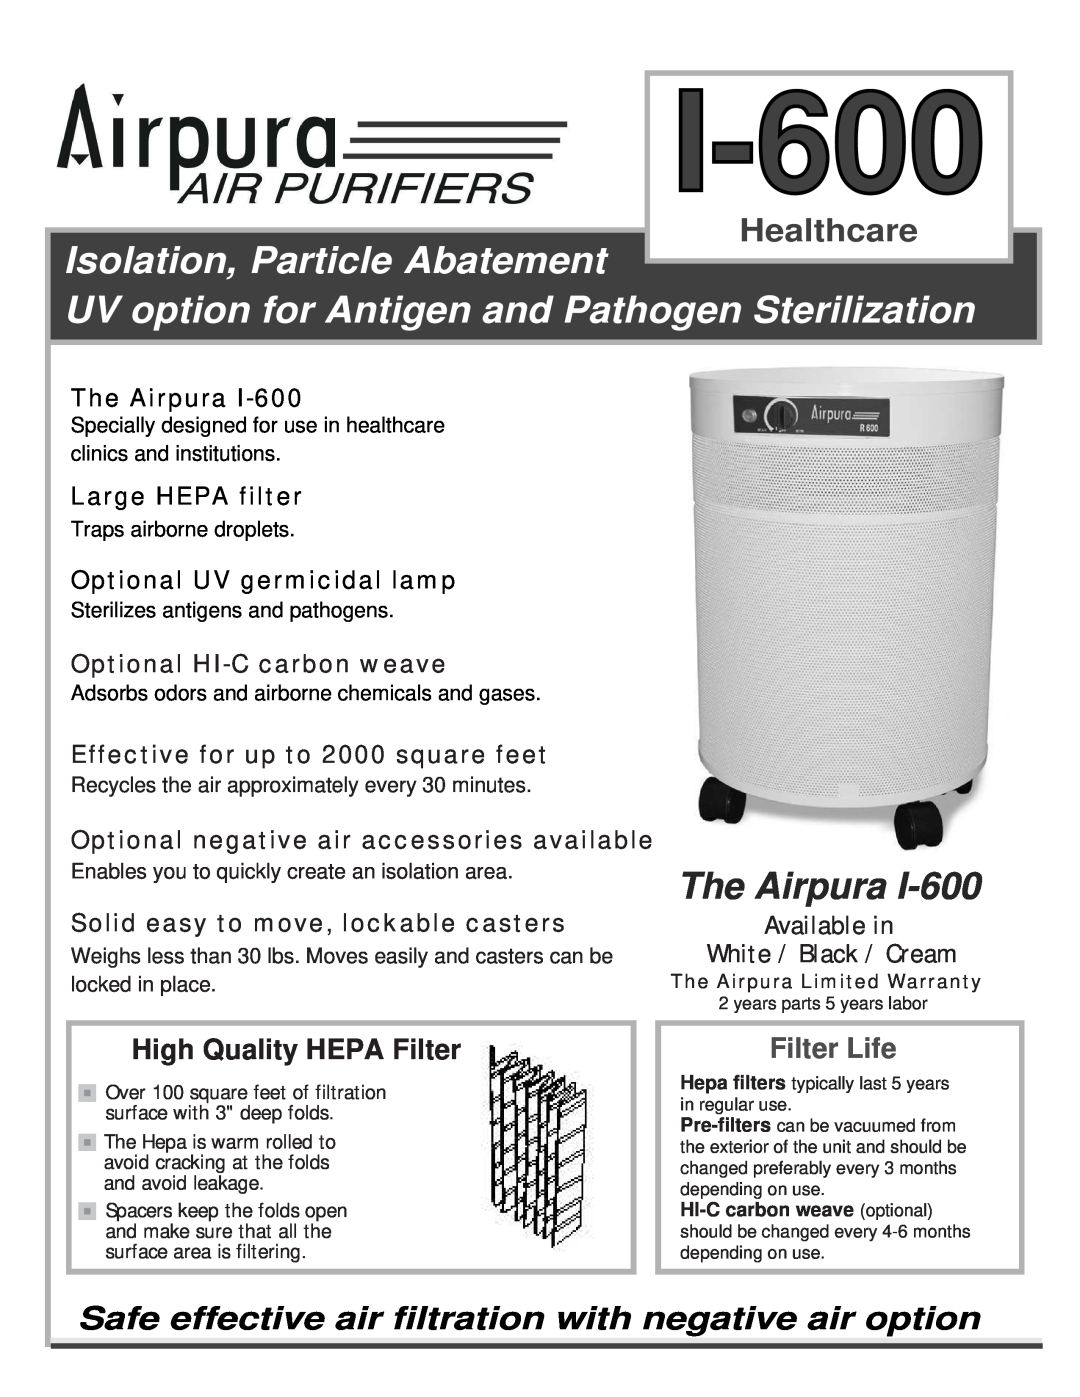 NewAir I-600 warranty Healthcare, The Airpura, Large HEPA filter, Optional UV germicidal lamp, Optional HI-Ccarbon weave 